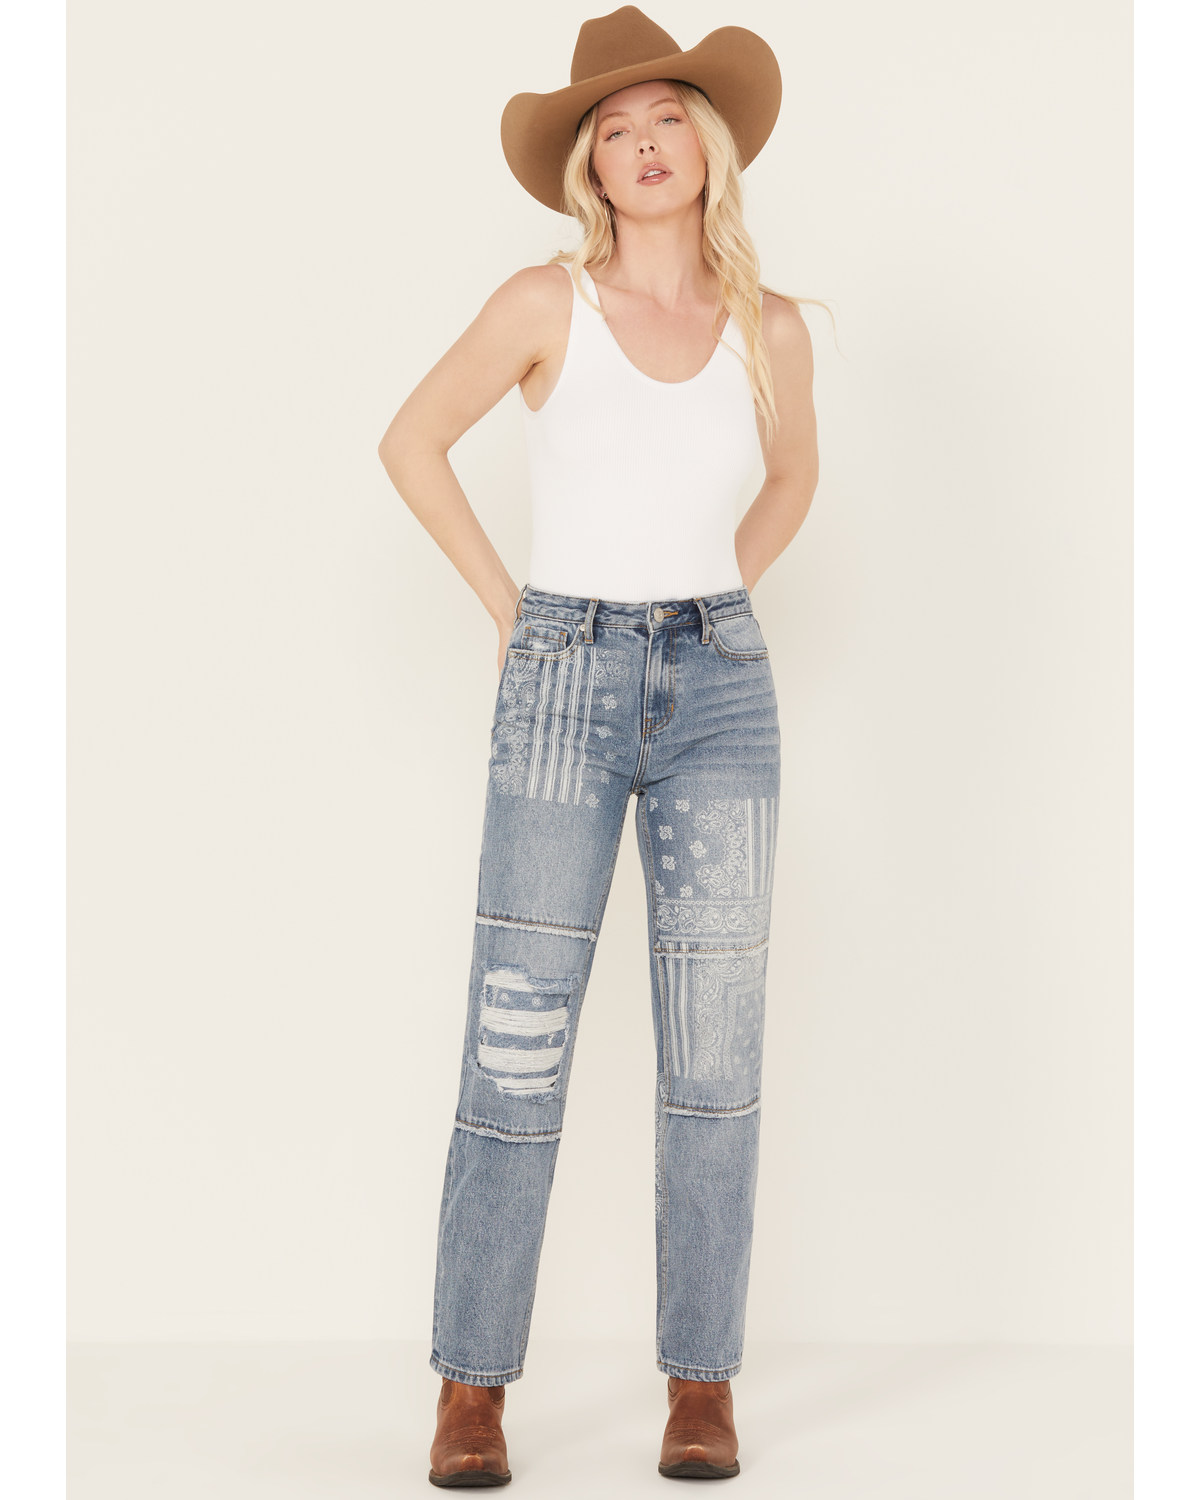 Cleo + Wolf Women's Astoria Medium Wash High Rise Straight Jeans